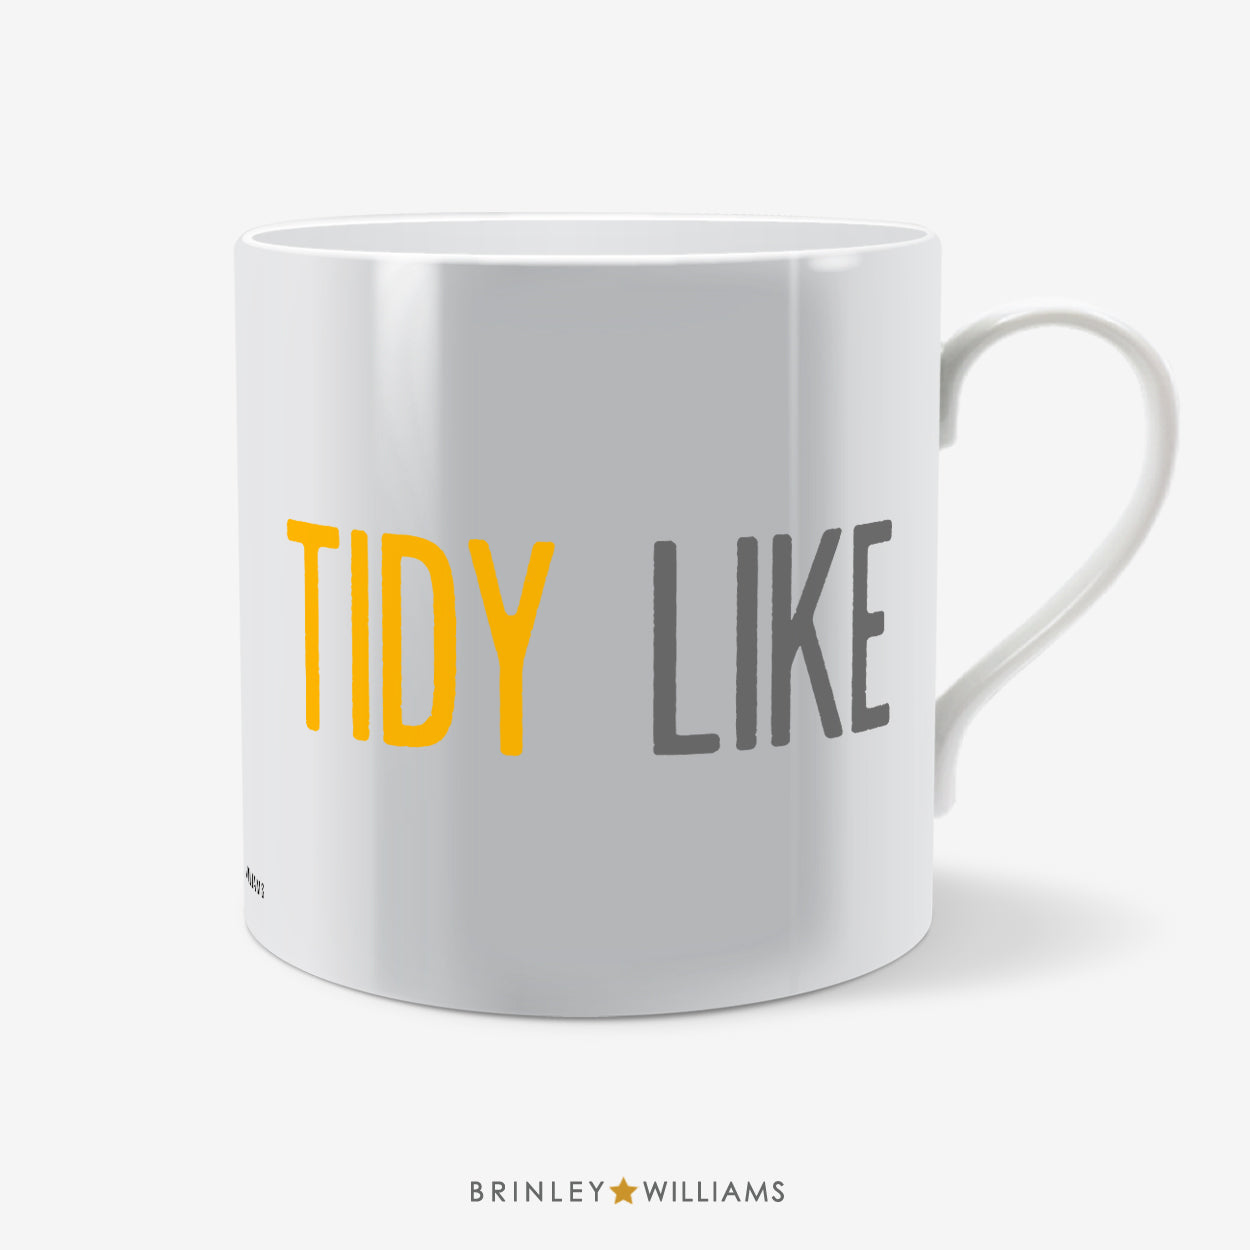 Tidy Like Welsh Mug - Yellow